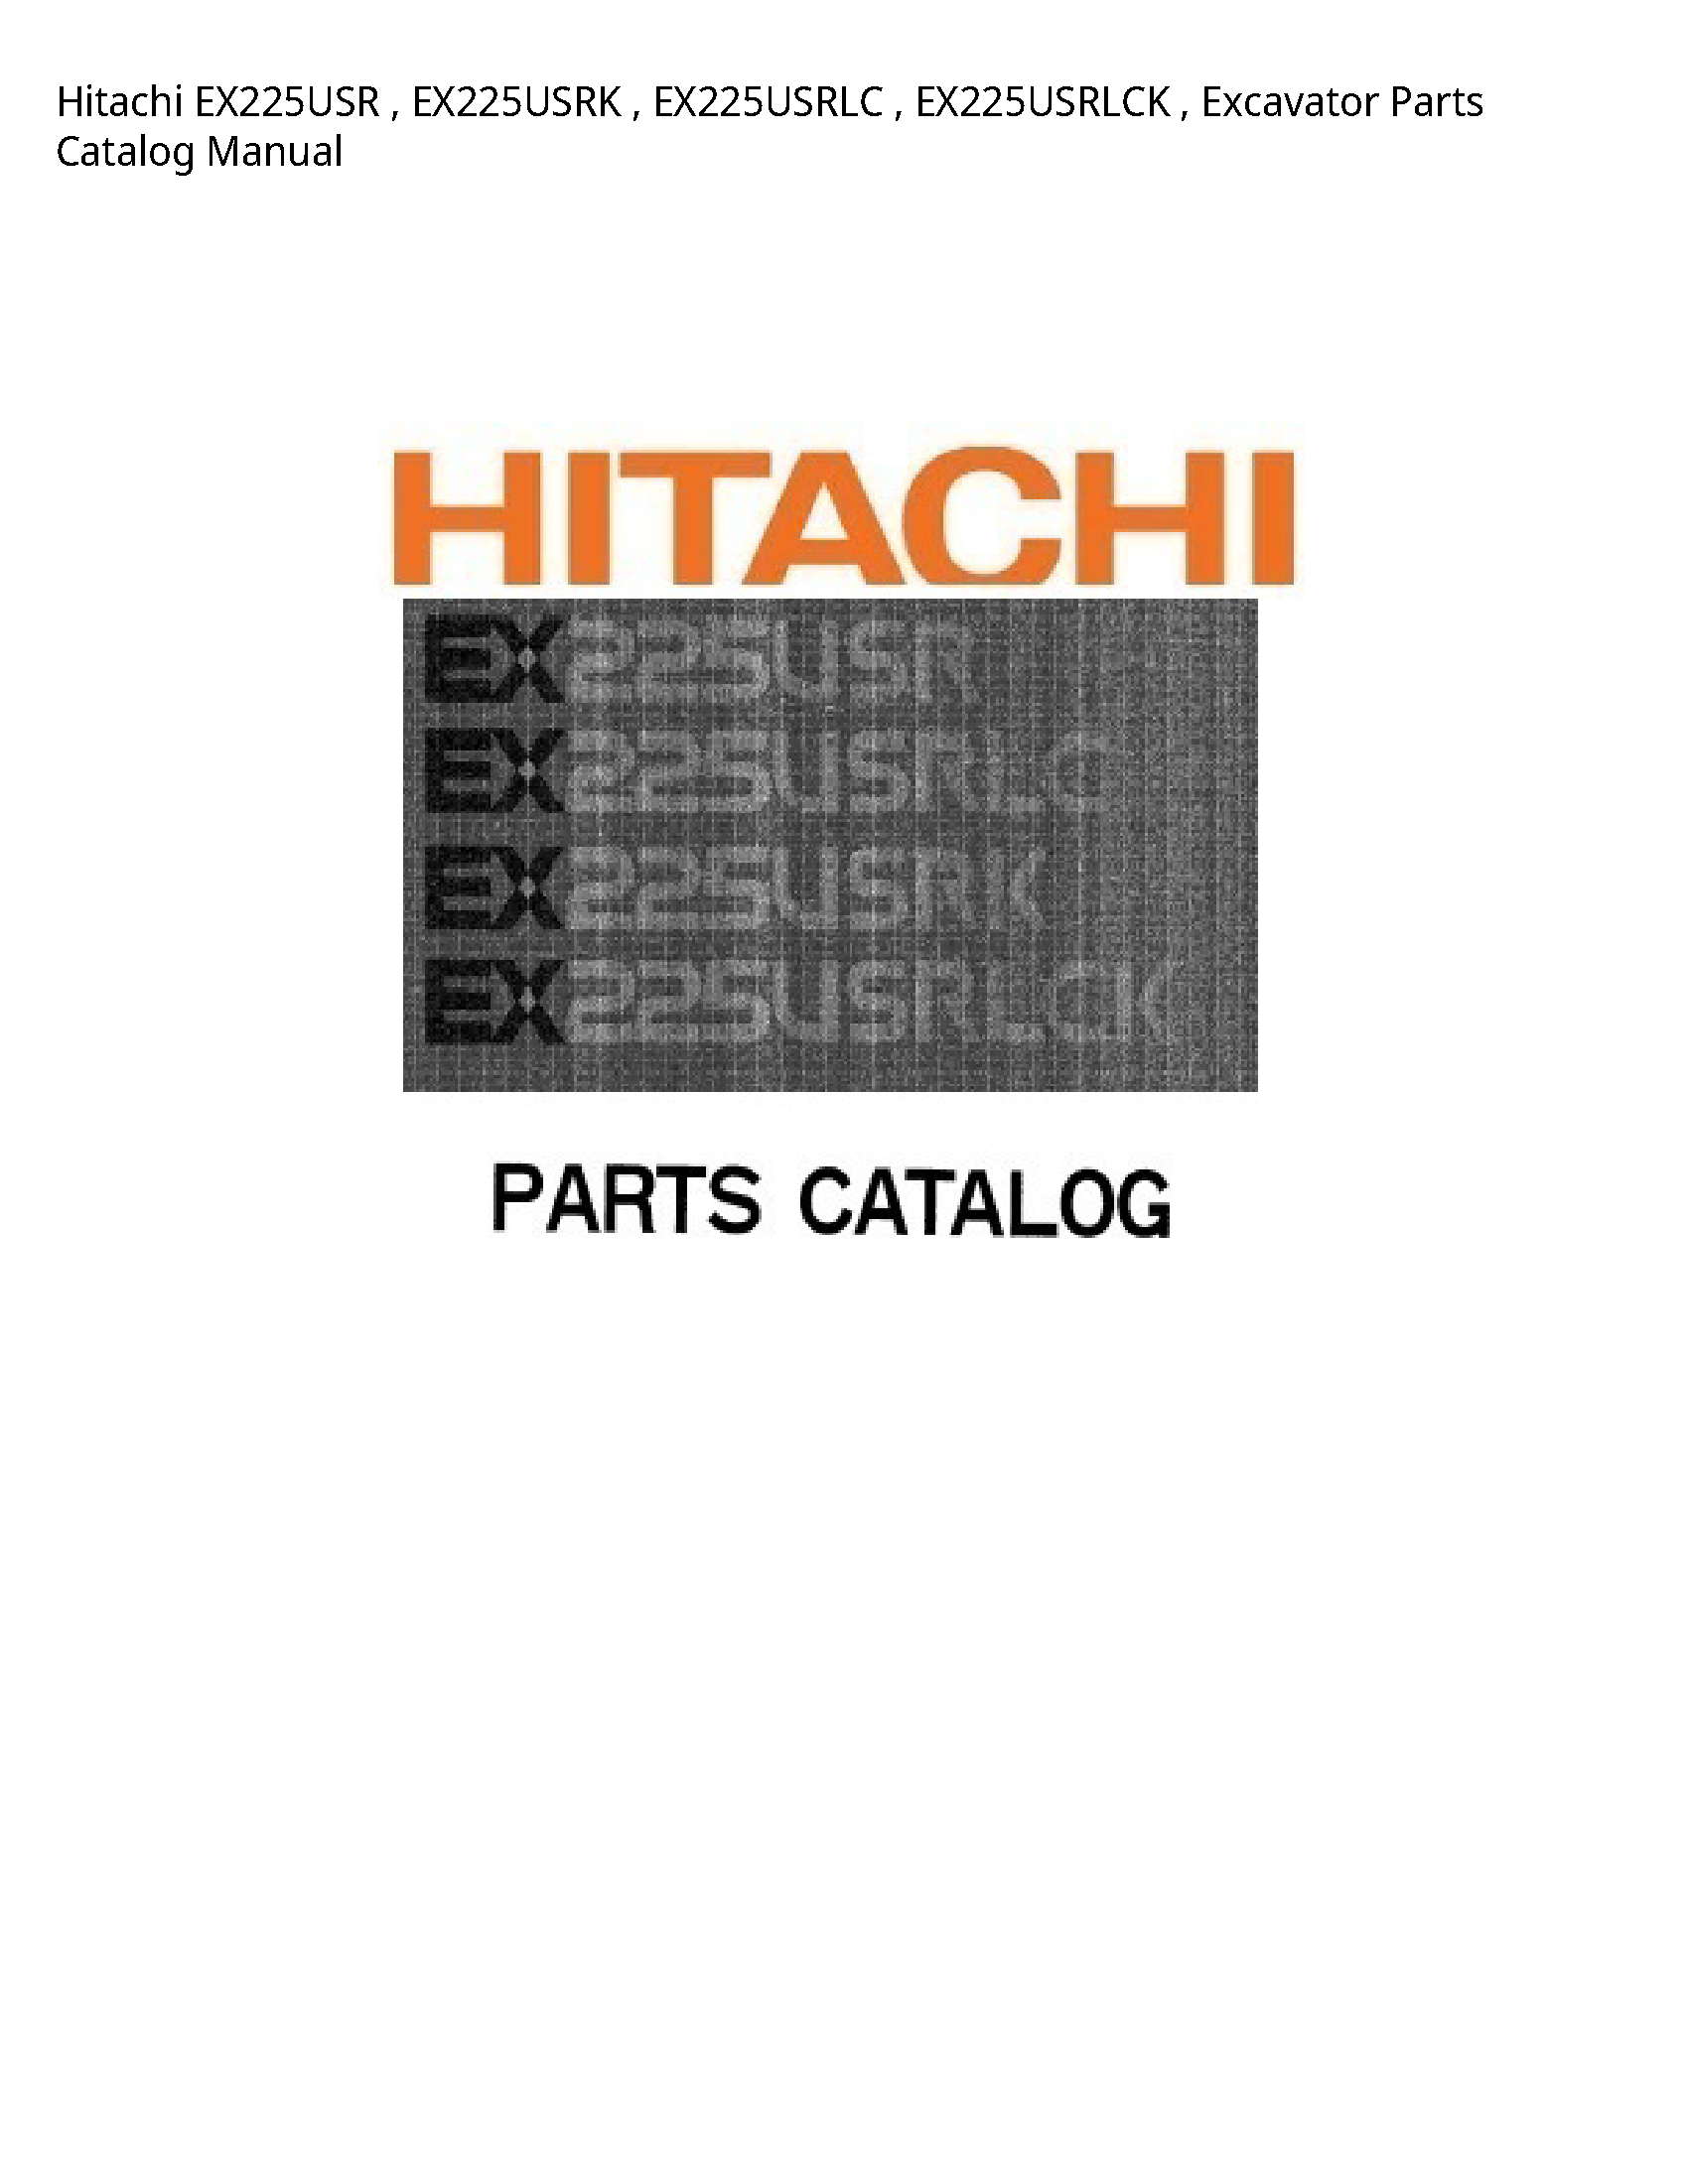 Hitachi EX225USR Excavator Parts Catalog manual